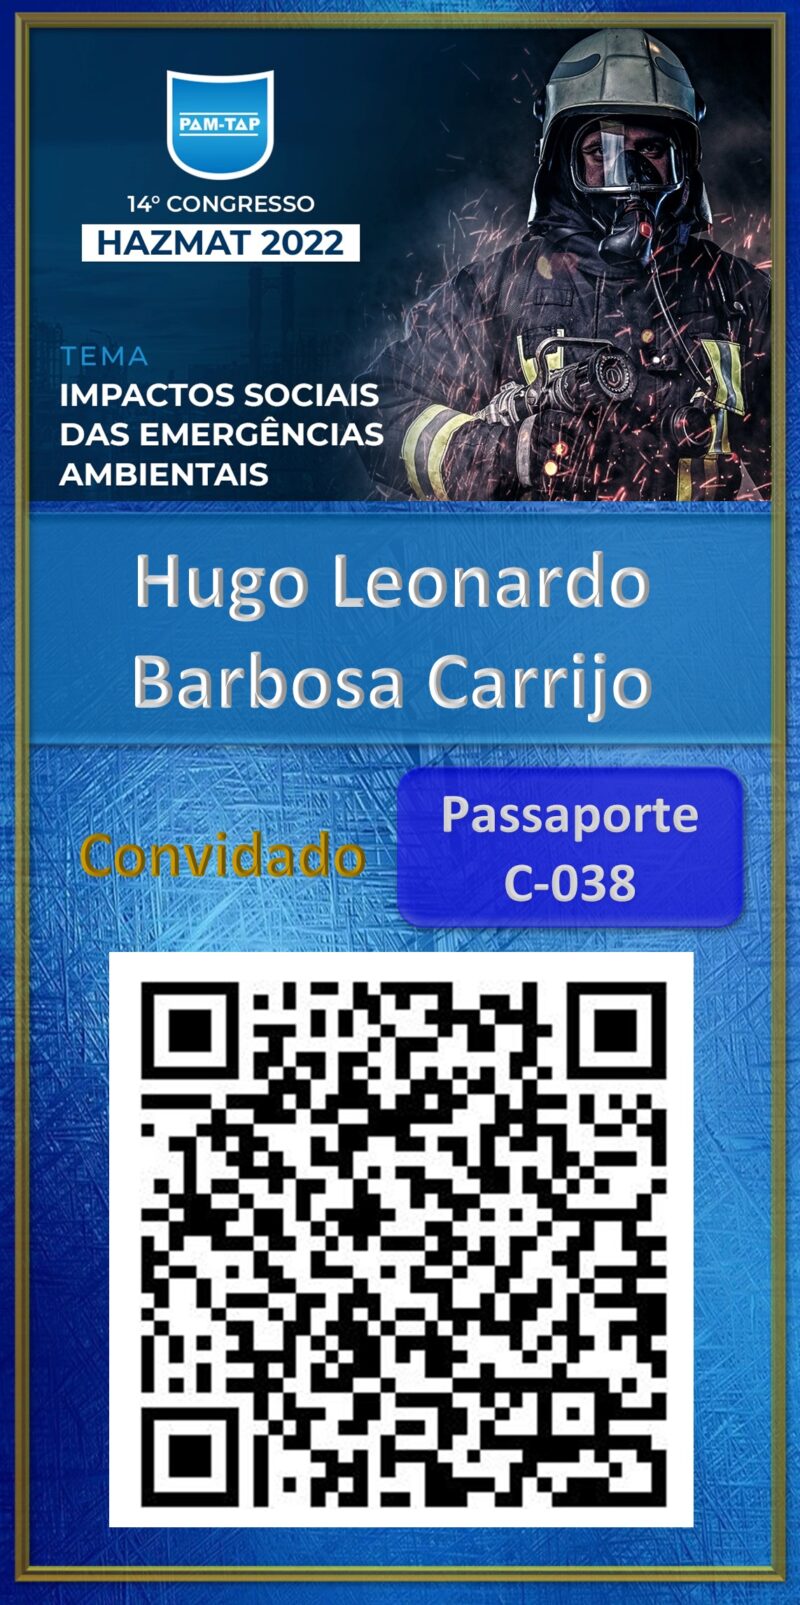 Hugo Leonardo Barbosa Carrijo-Hazmat 2022-Empresa